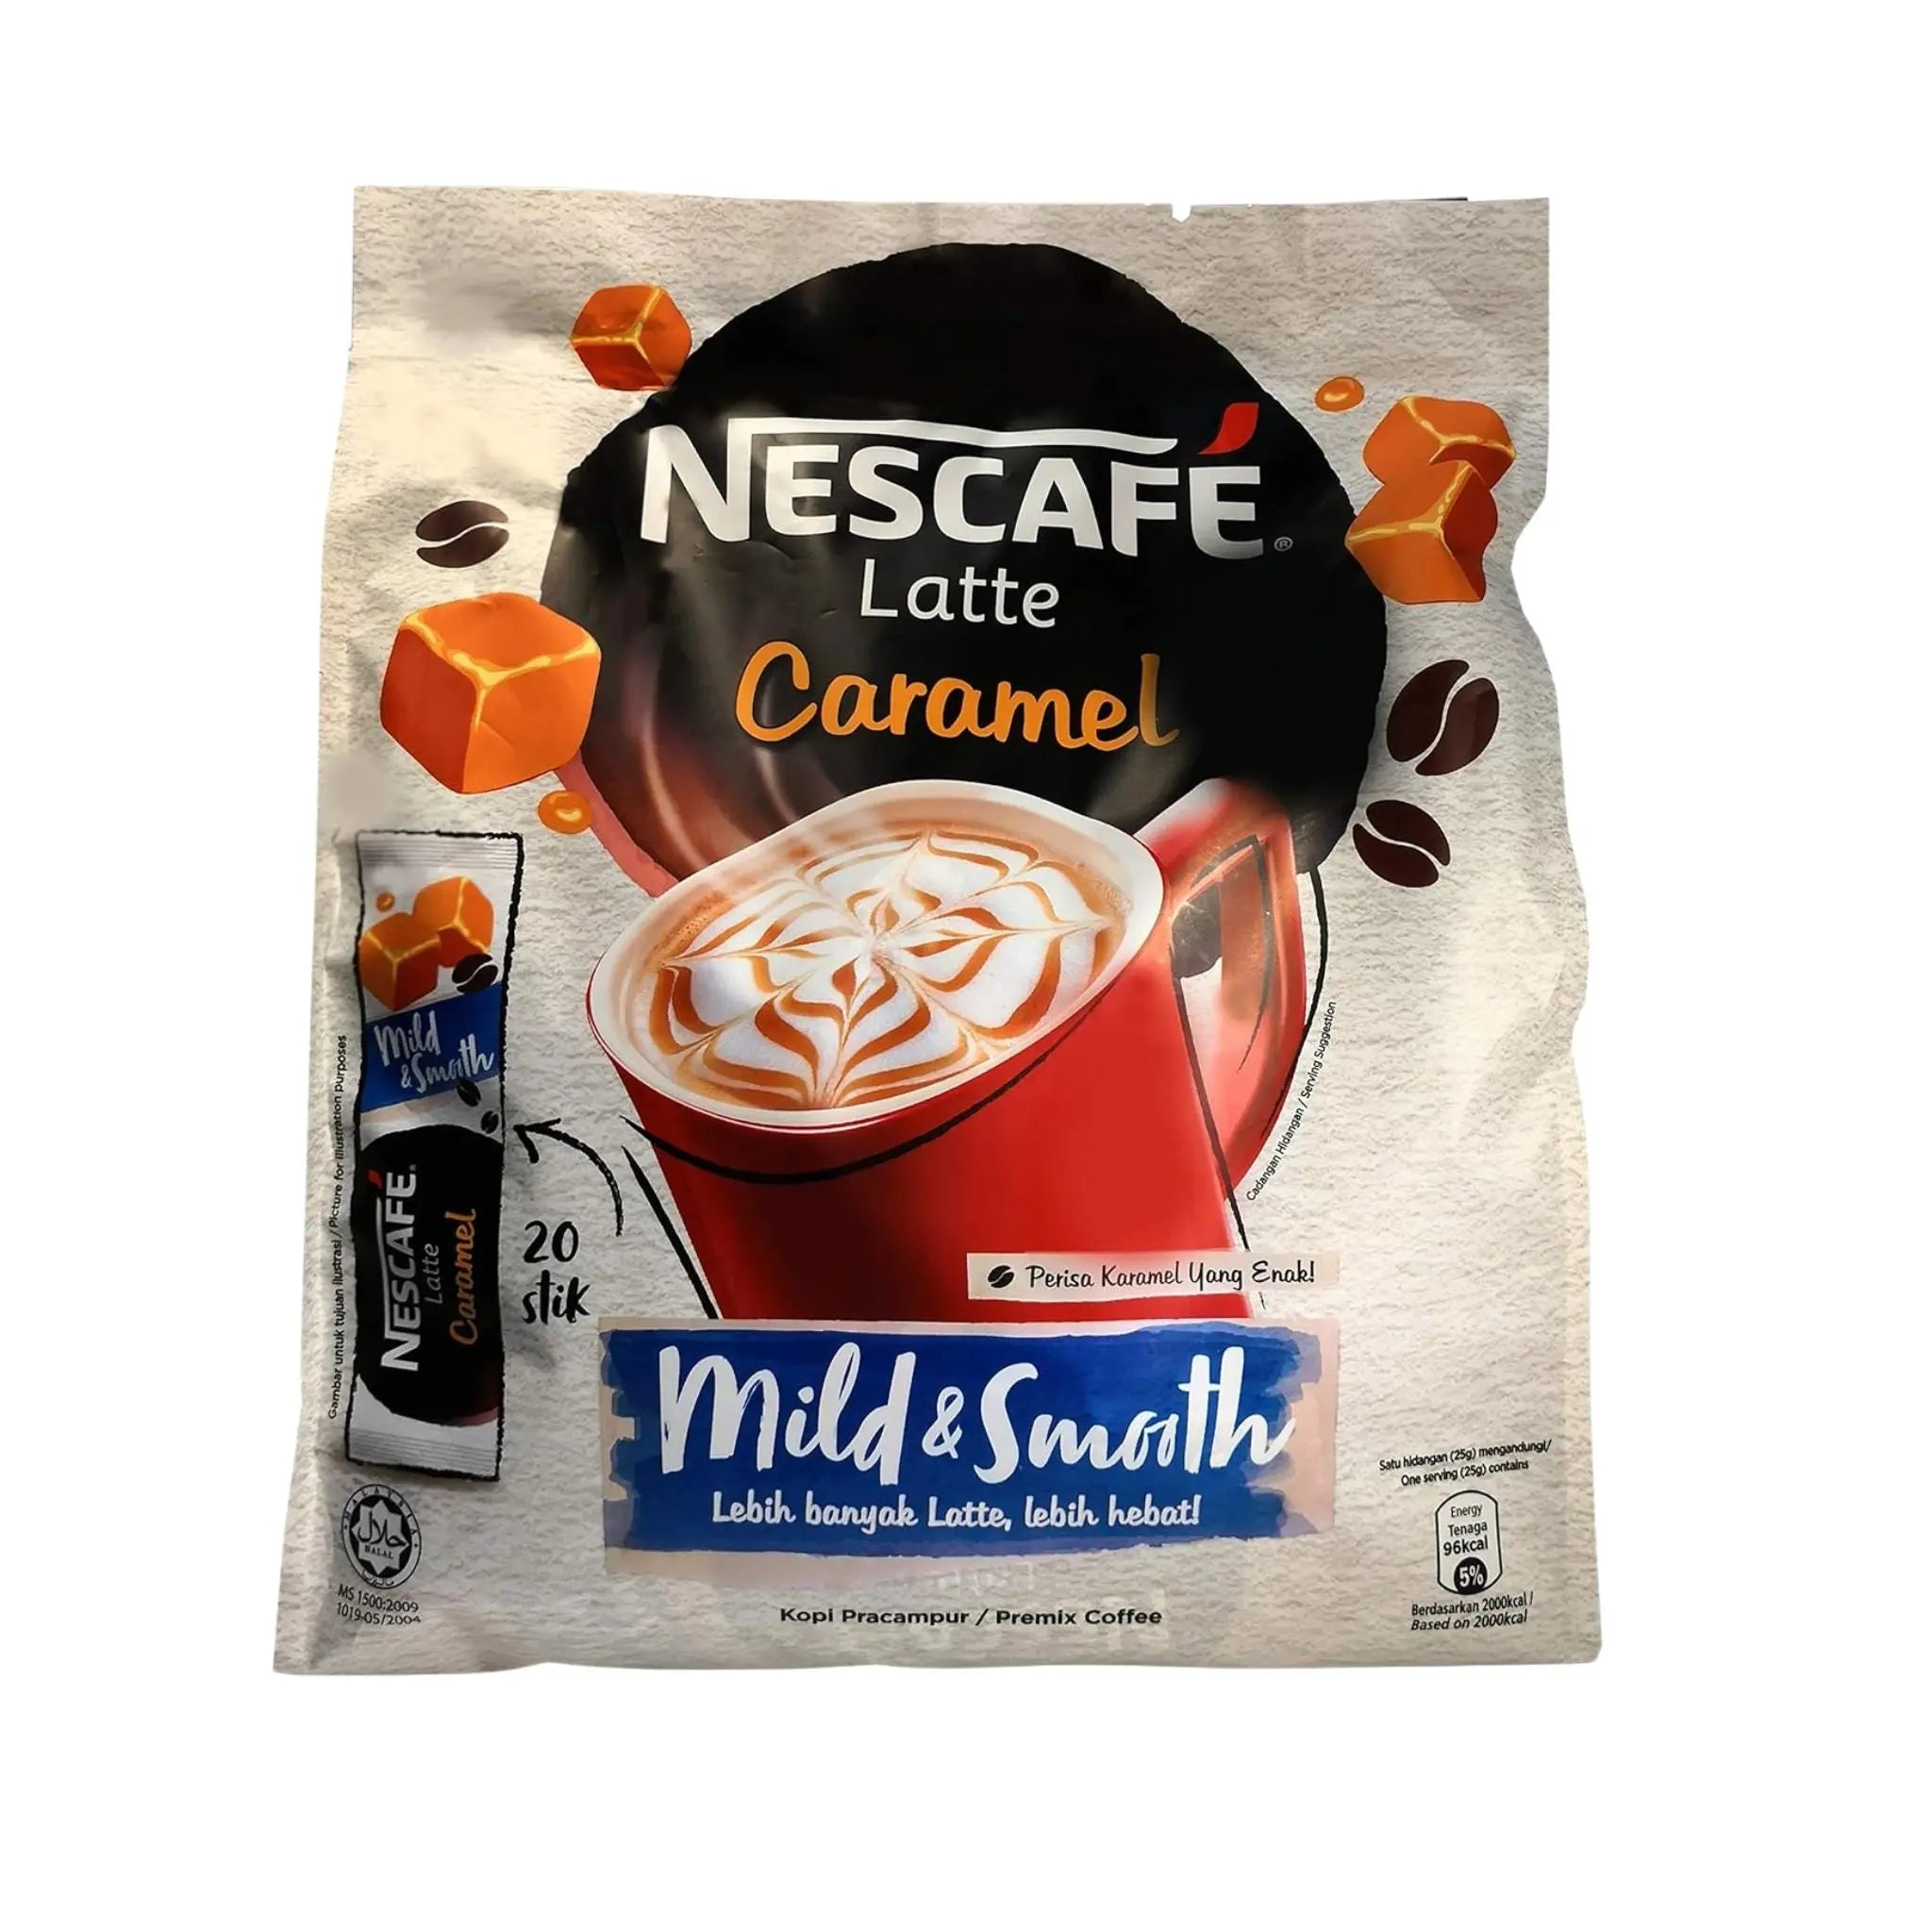 Nescafe 3in1 Latte Caramel - 24x20x25g (1 carton) - Marino.AE